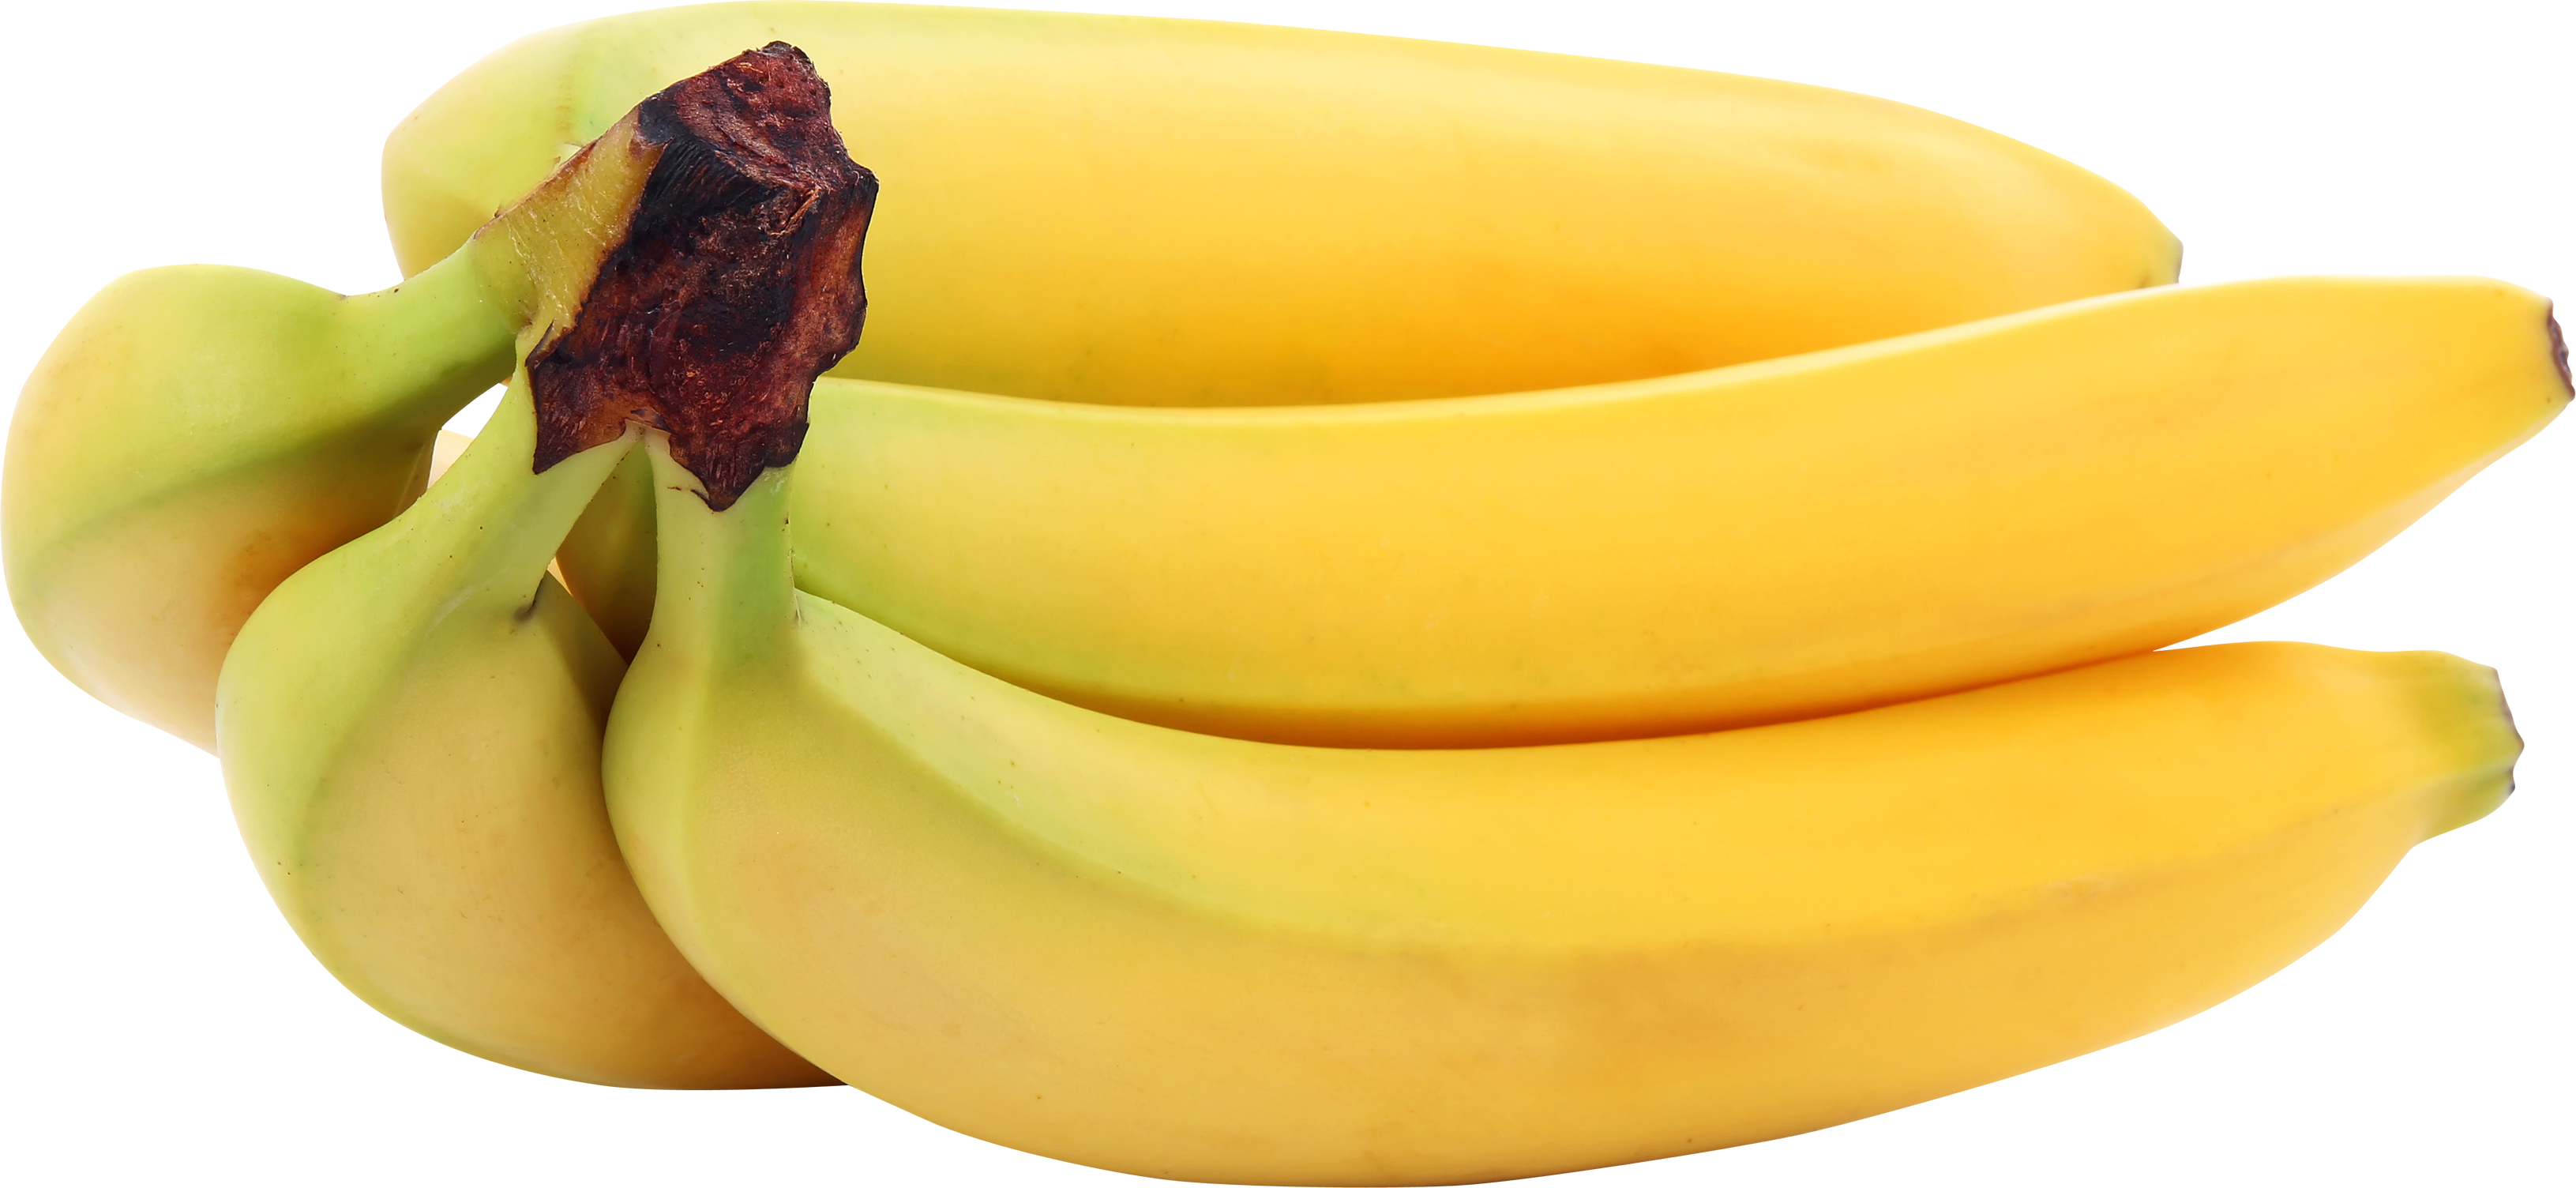 Banana PNG image, free picture downloads, bananas